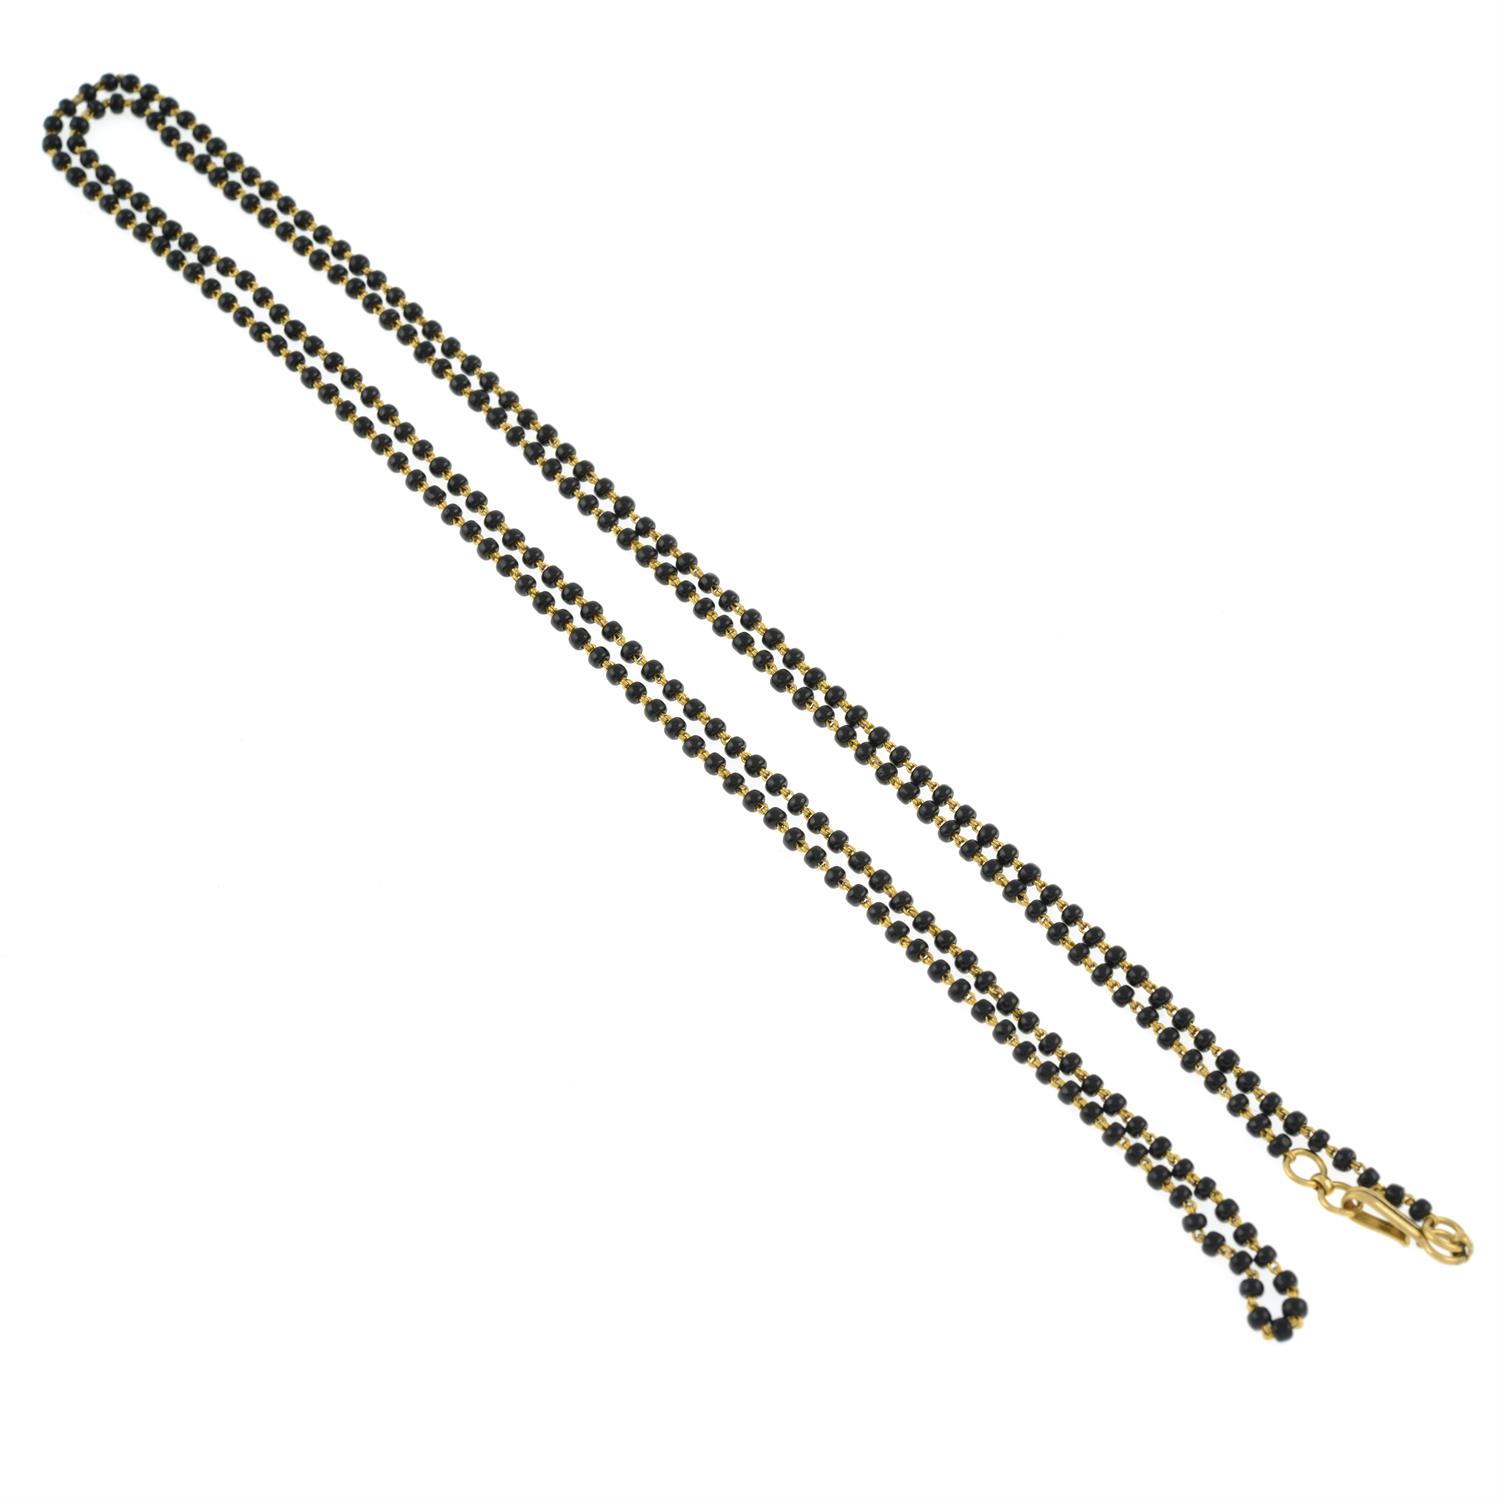 Onyx bead single-strand necklace